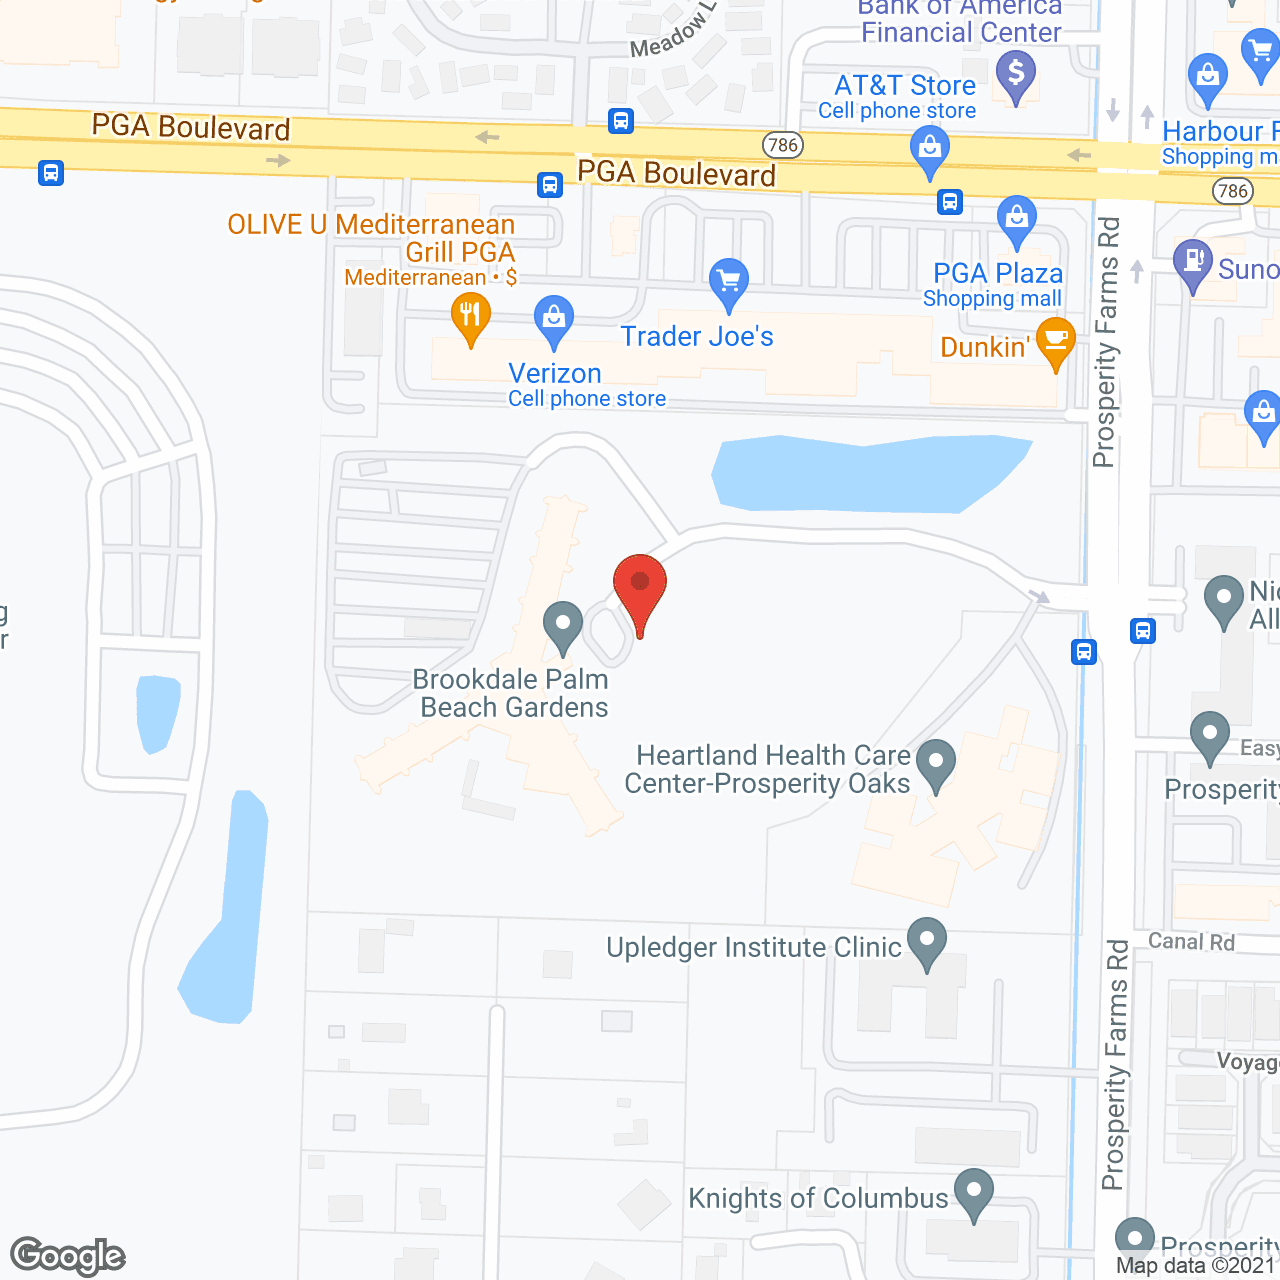 Brookdale Palm Beach Gardens in google map